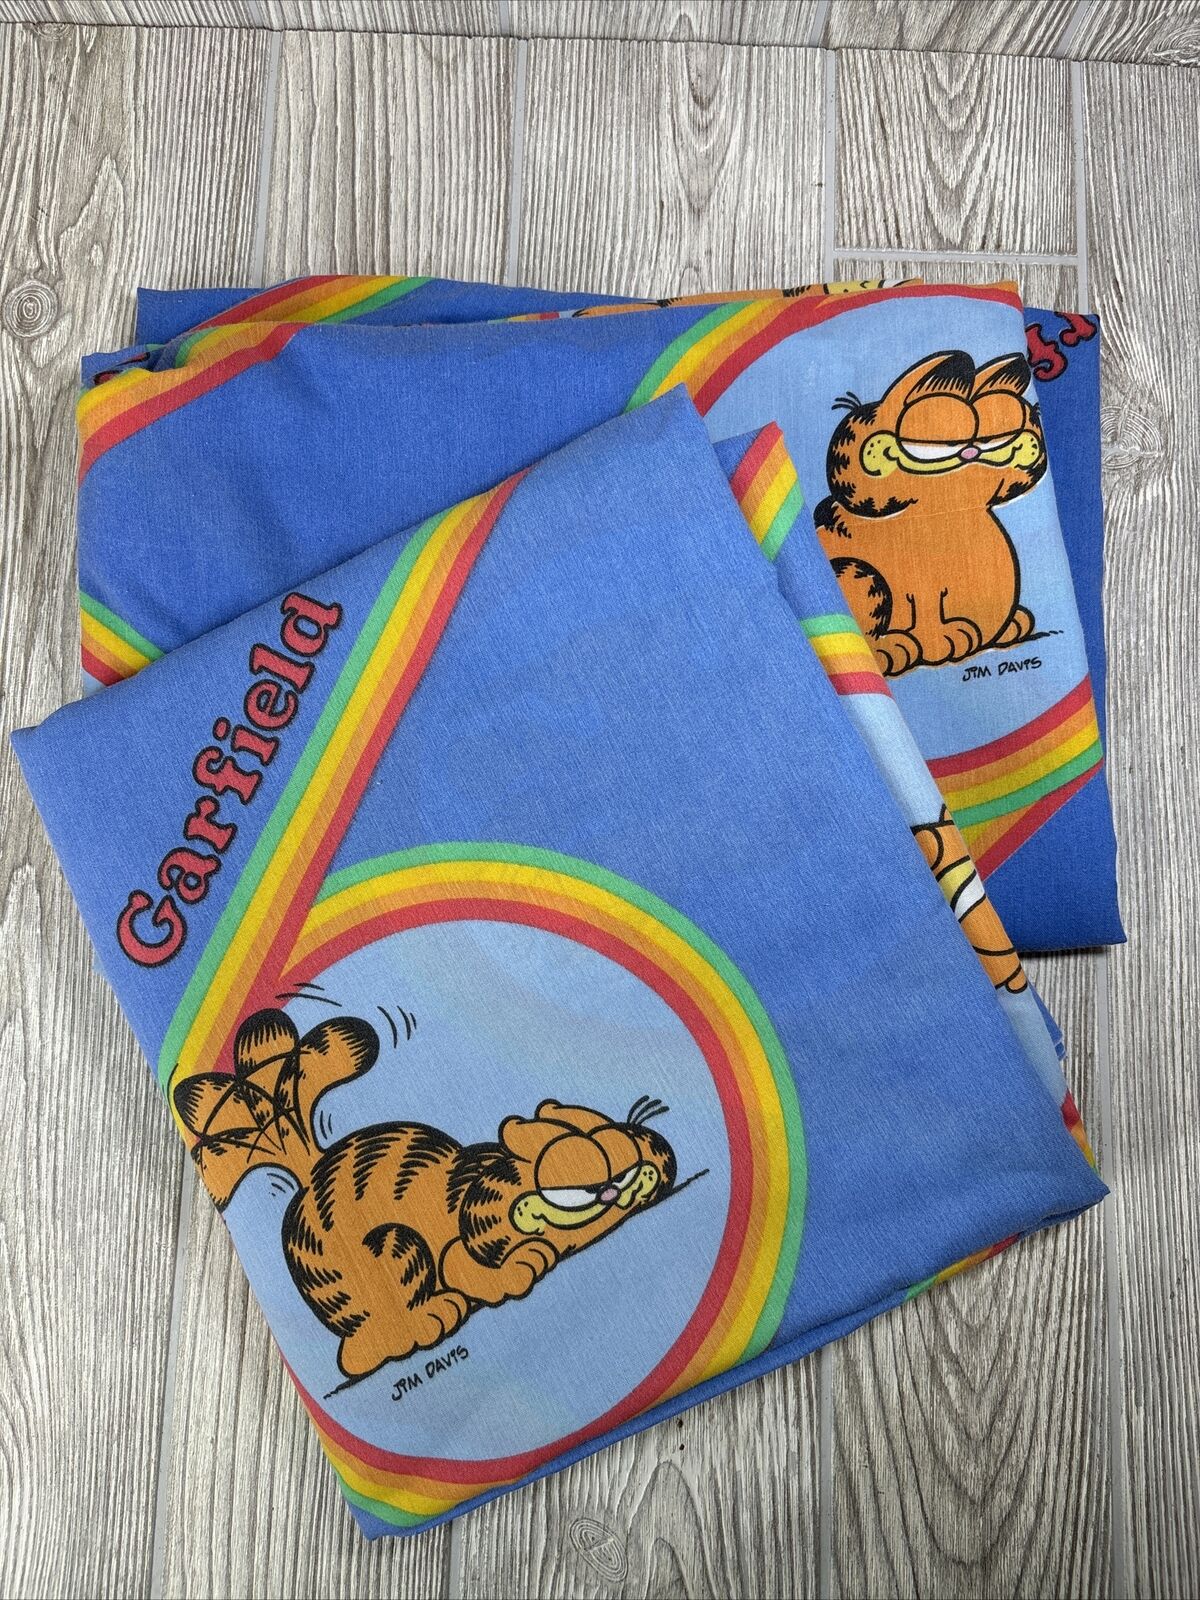 Garfield Sheet Set Full Size American Lifestyle Fitted & Flat 1978 Rainbow Davis